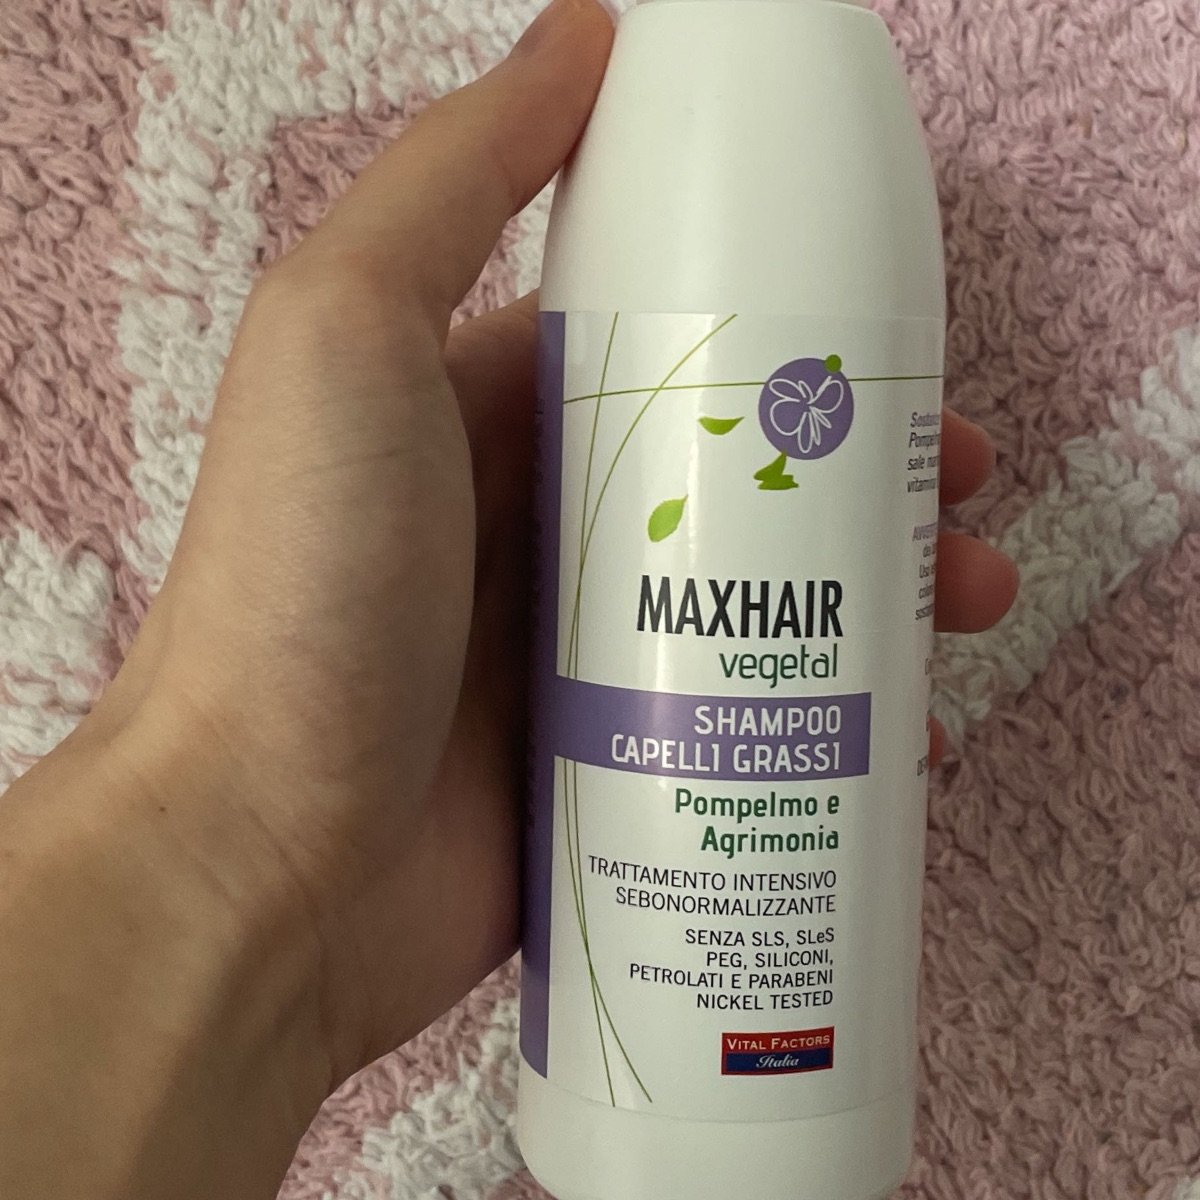 Maxhair vegetal Shampoo capelli grassi Reviews